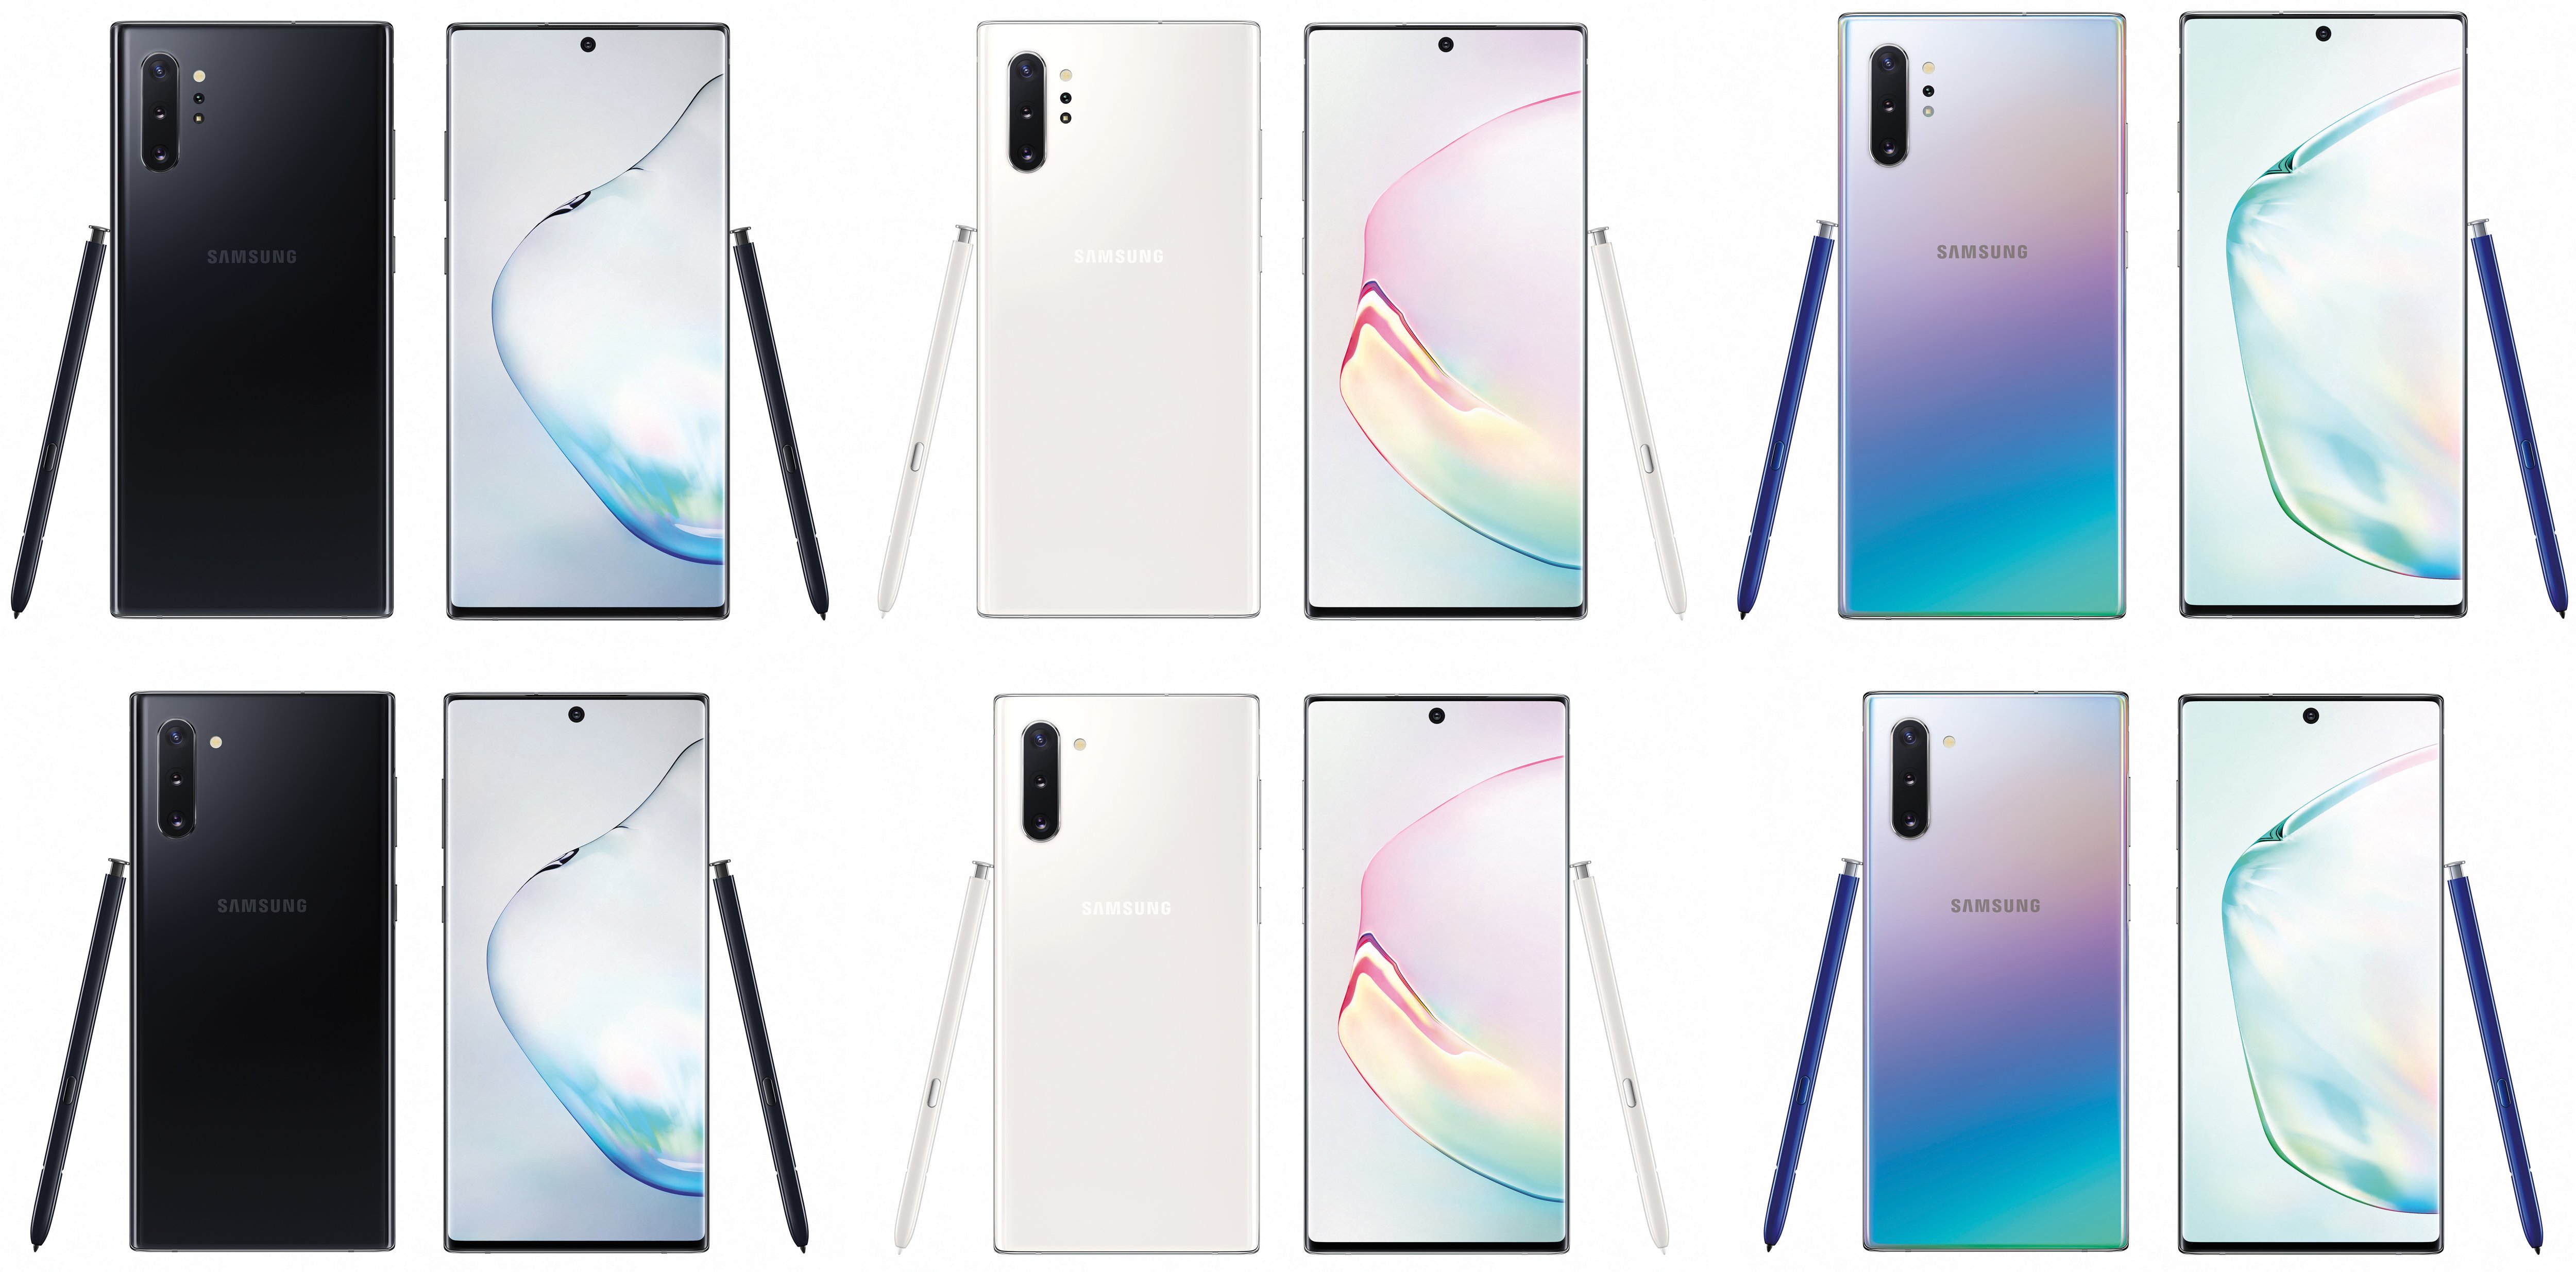 Samsug Galaxy Note10 / Note10 +: تصفية الصور عالية الجودة في جميع الألوان الثلاثة